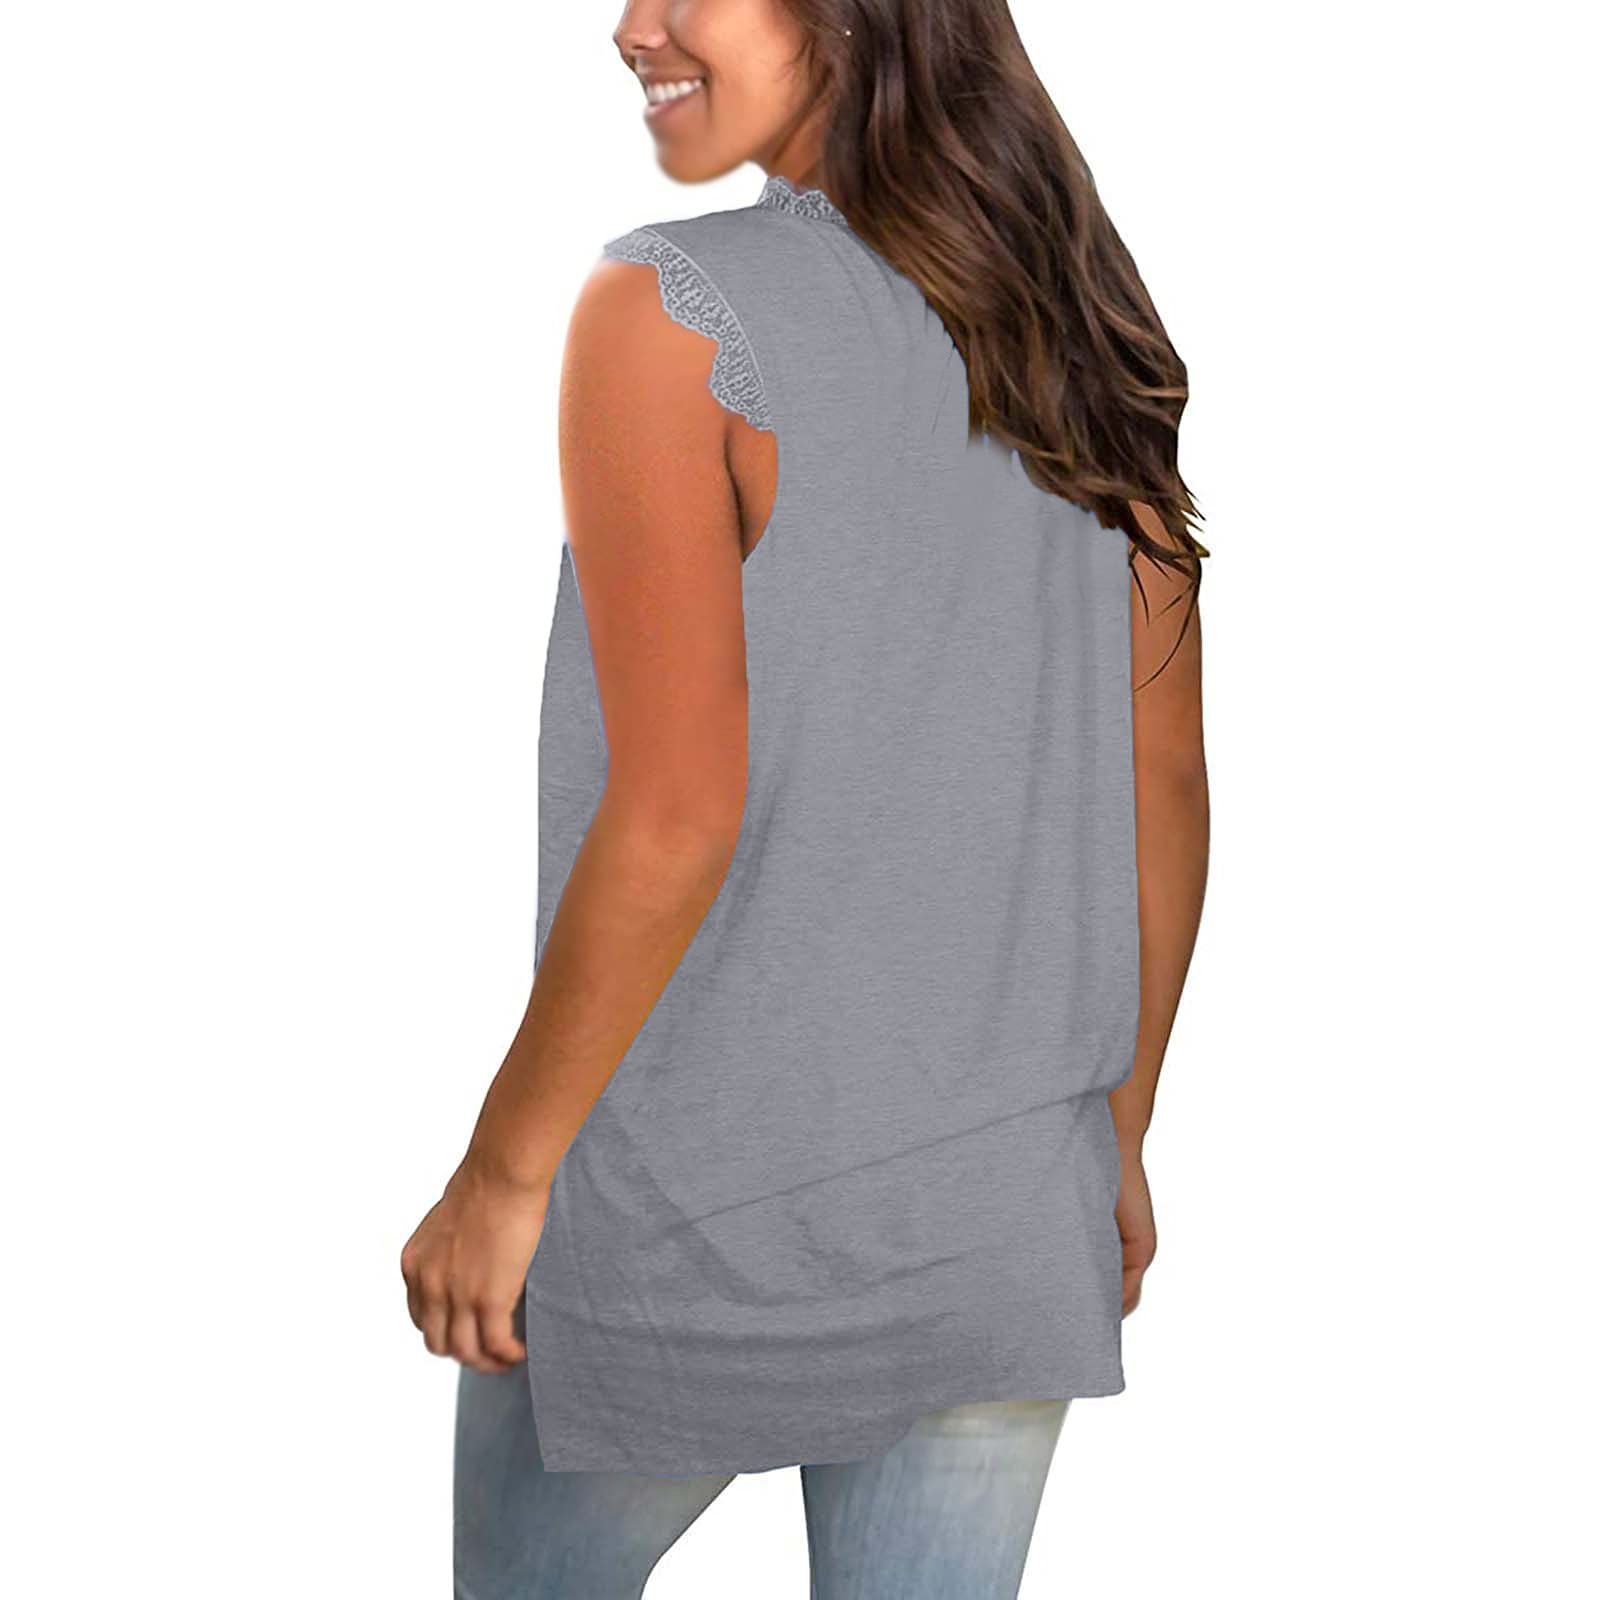 wodceeke Womens V Neck Tank Tops Sleeveless Gradient Blouse Shirts Summer Loose Henley Tops Tee (5- Gray, S)